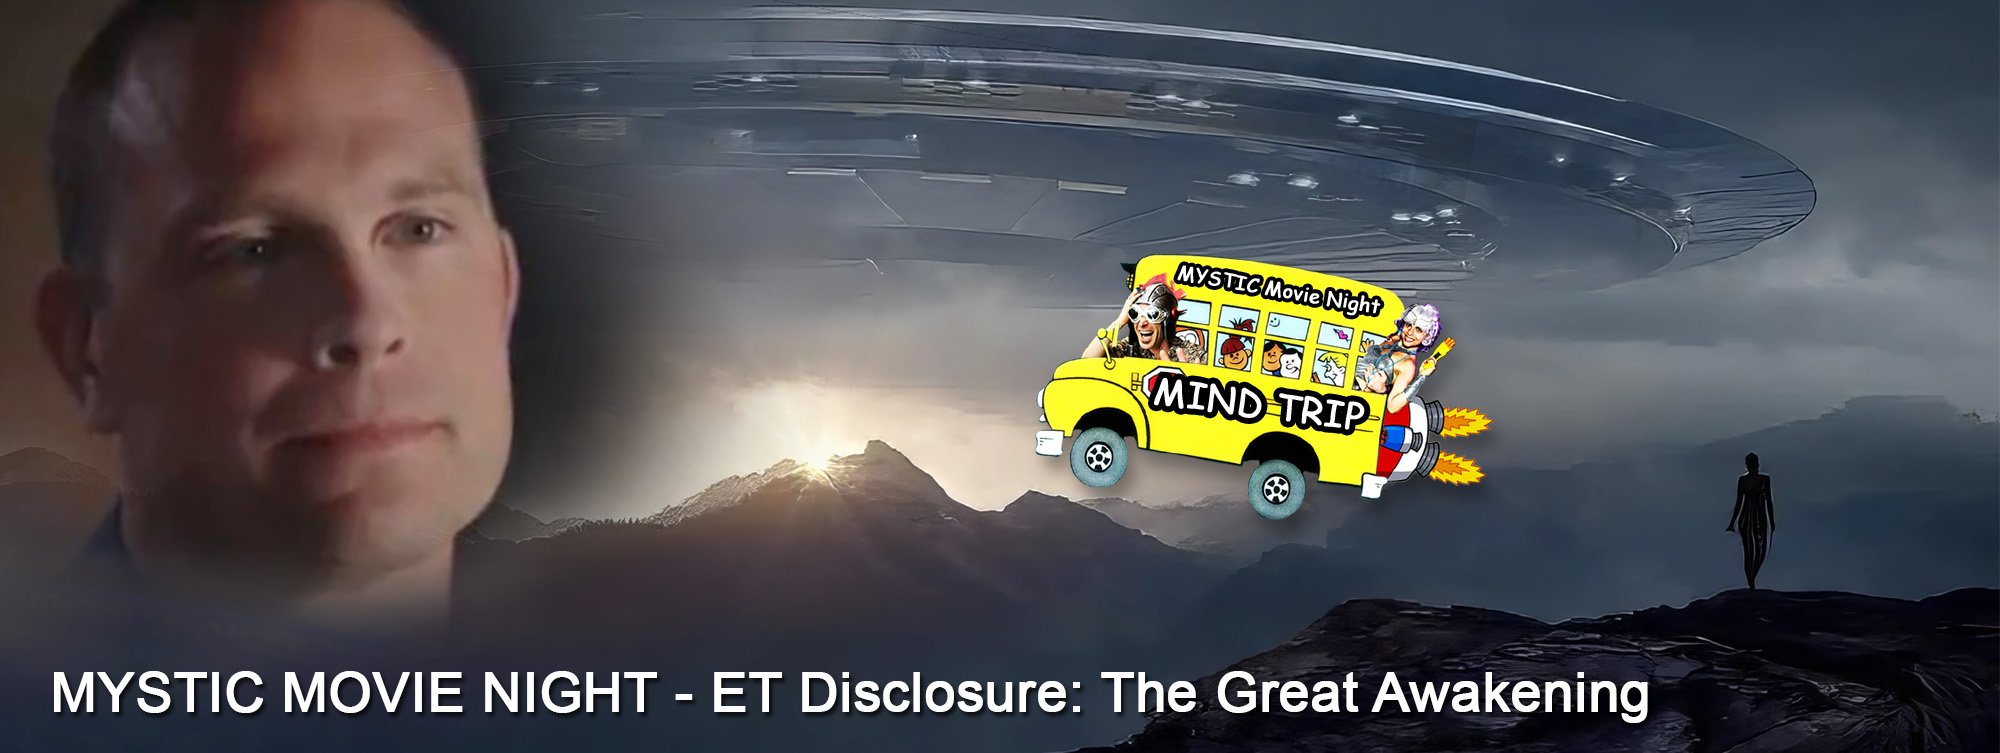 ET Disclosure - The Great Awakening.jpg